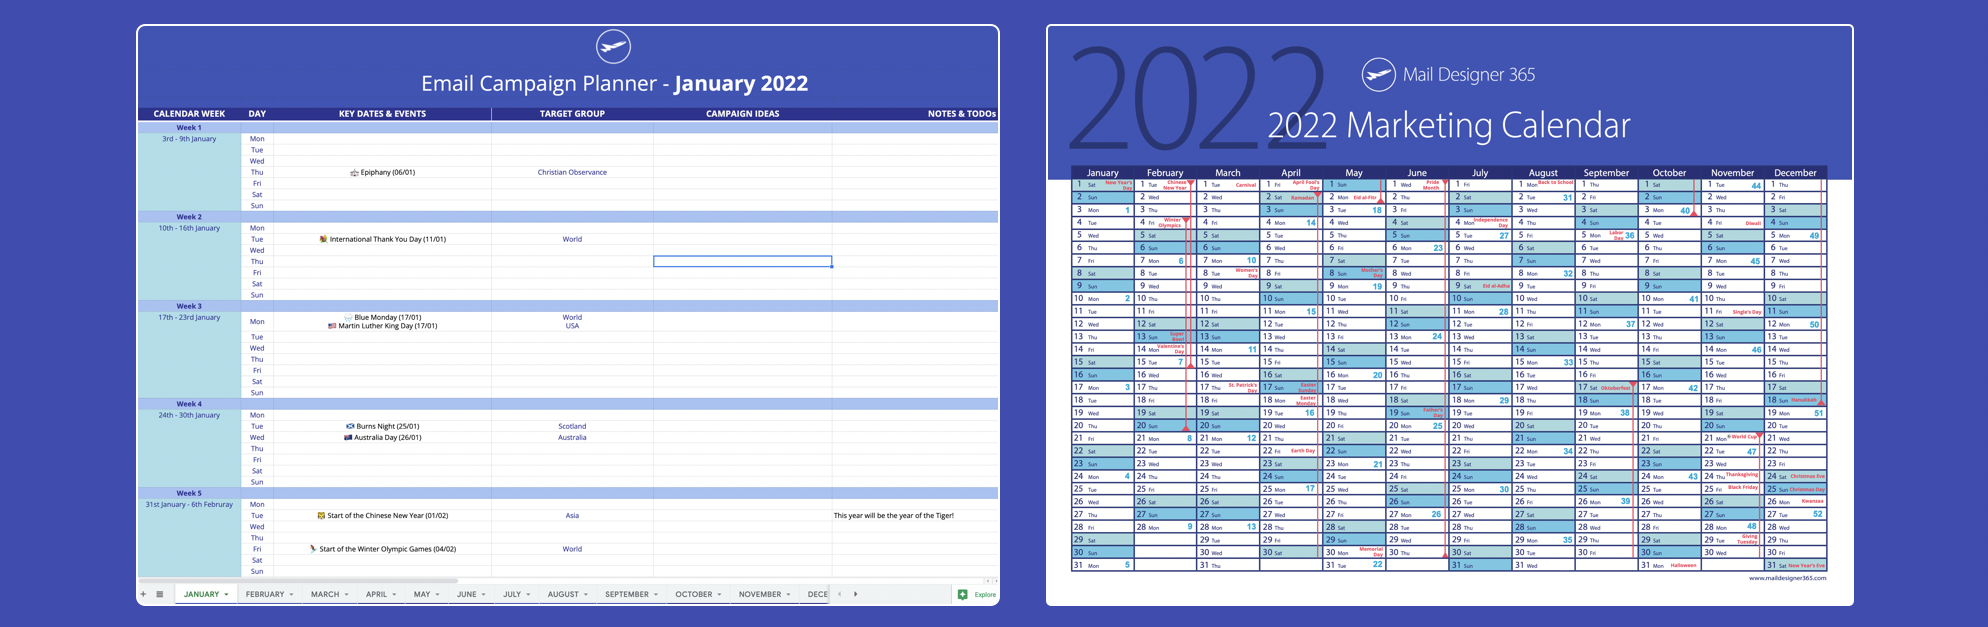 new marketing calendar resources for 2022